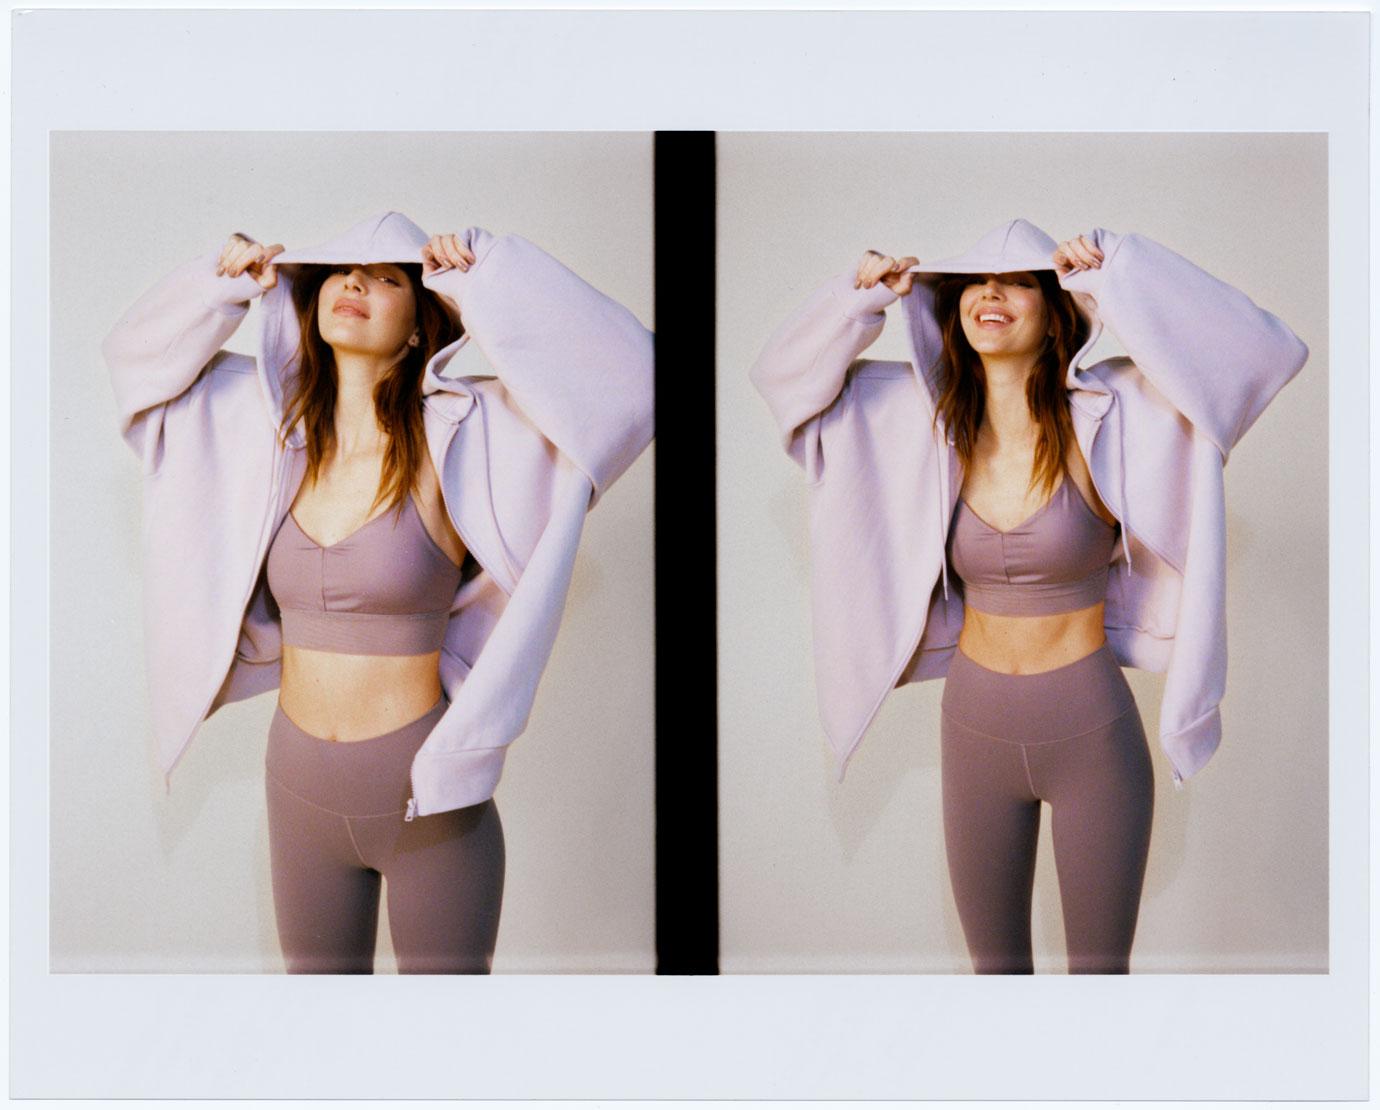 Kendall Jenner Slays As An Alo Yoga Brand Ambassador